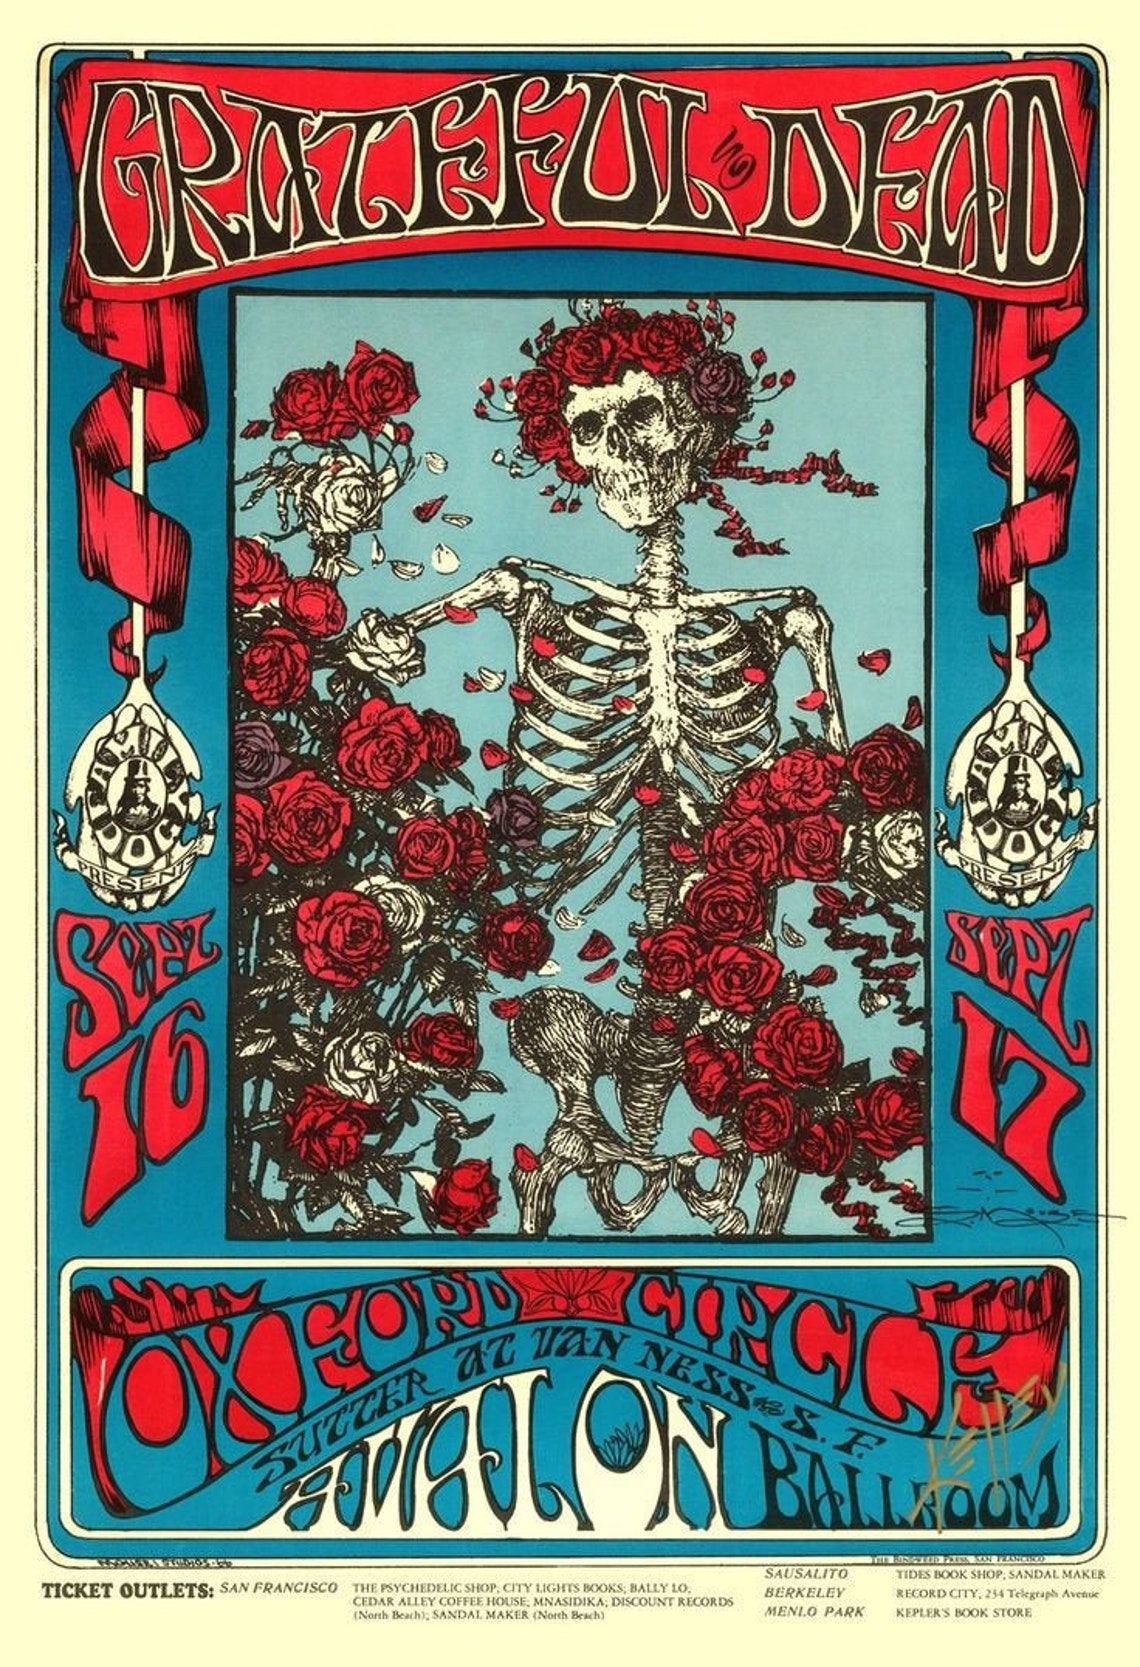 Grateful Dead Avalon Ballroom Concert Poster Re print 446 Etsy